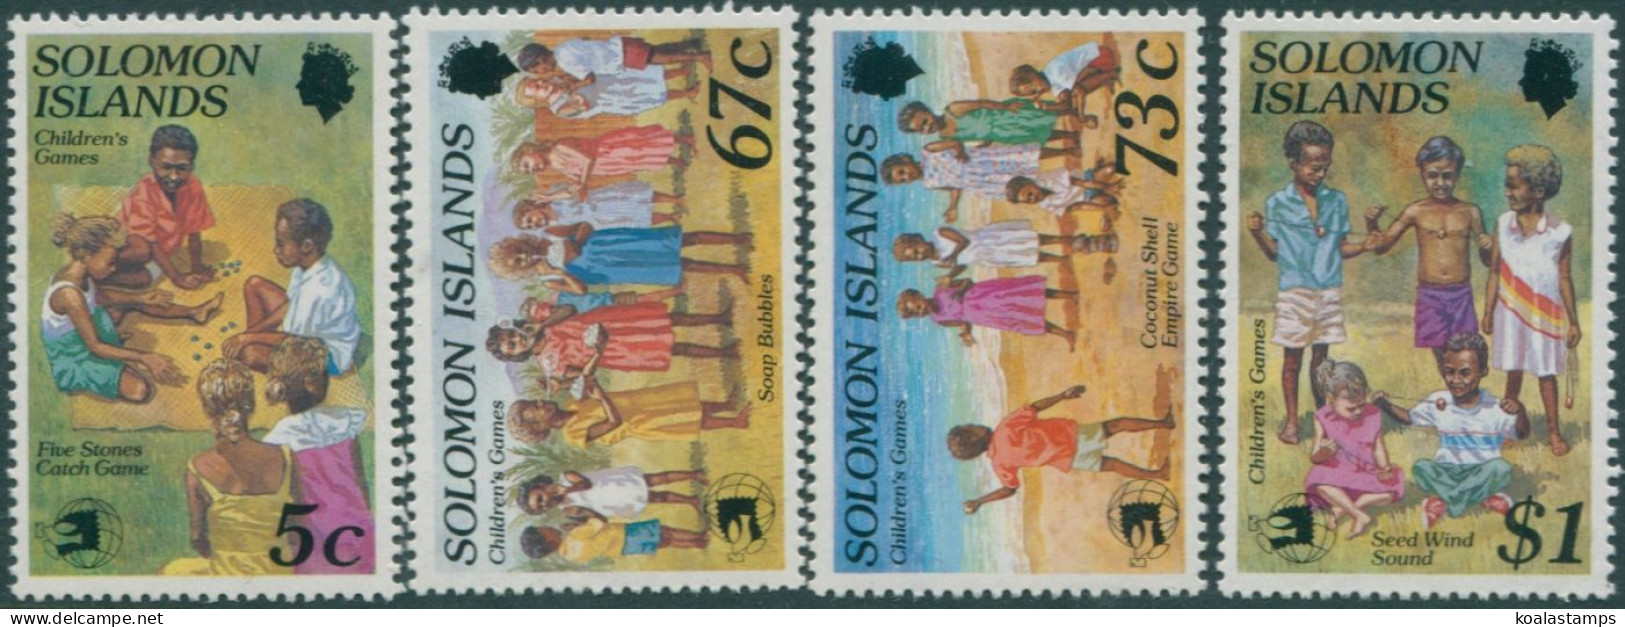 Solomon Islands 1989 SG657-660 Childrens Games Set MNH - Solomon Islands (1978-...)